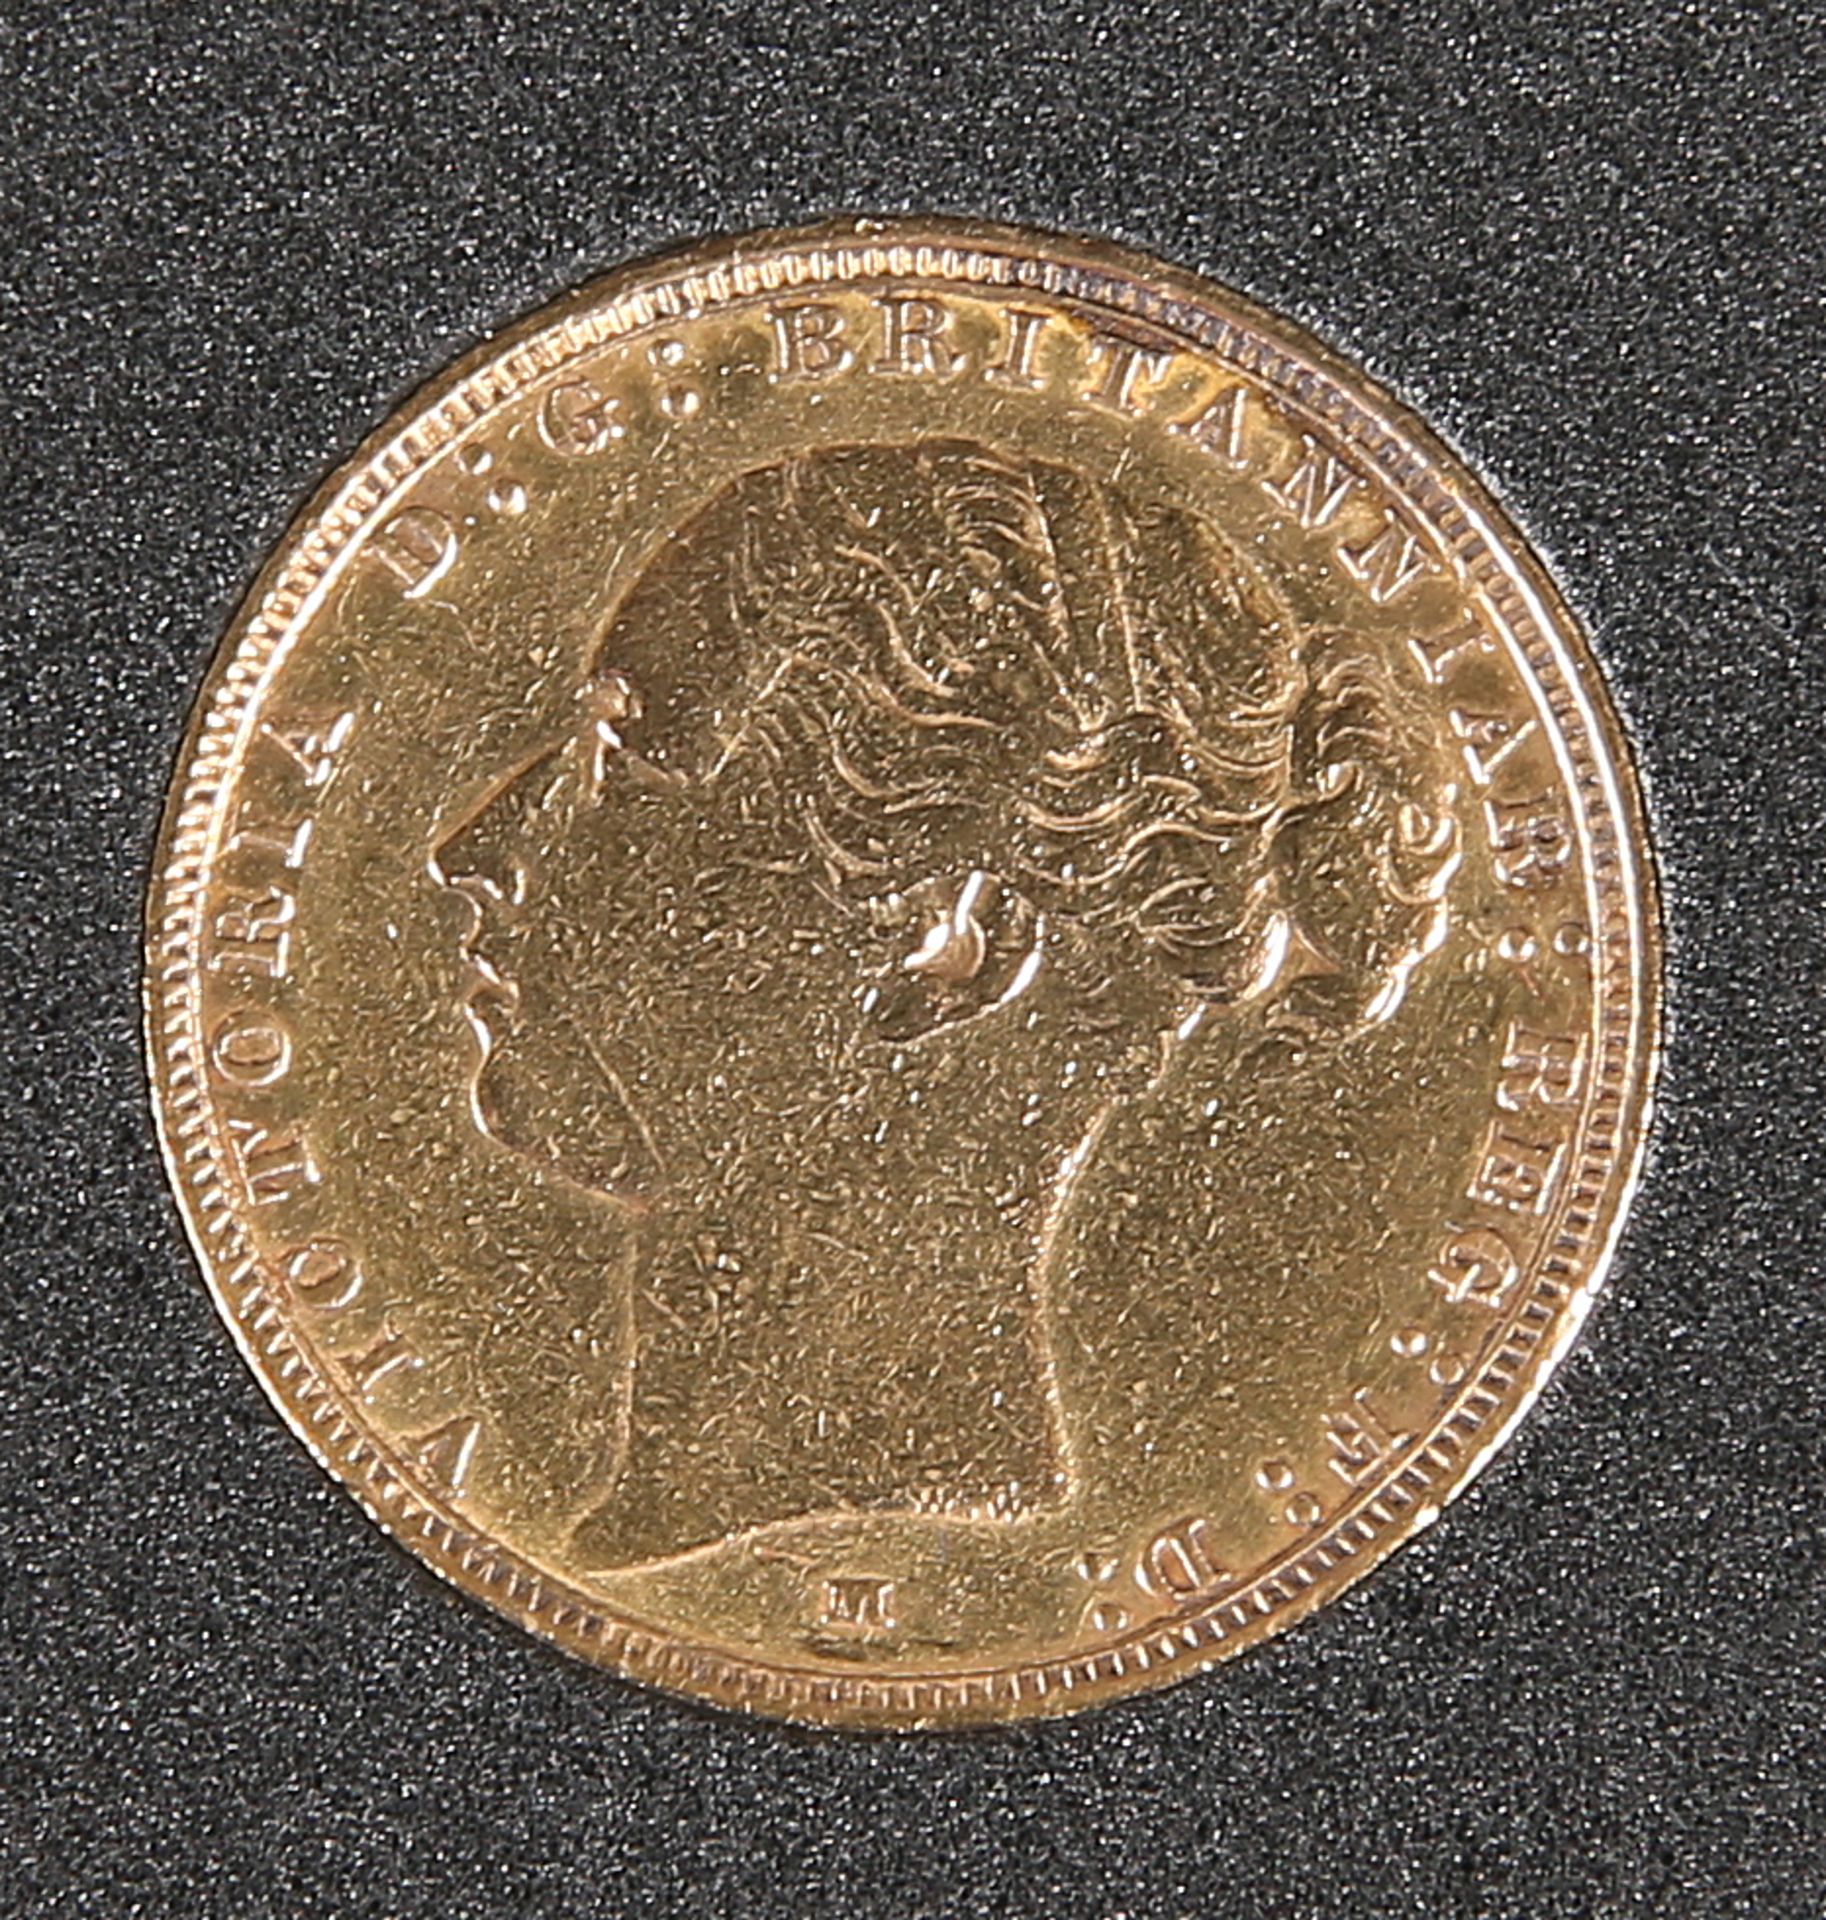 AN 1885 FULL SOVEREIGN, Melbourne Mint.